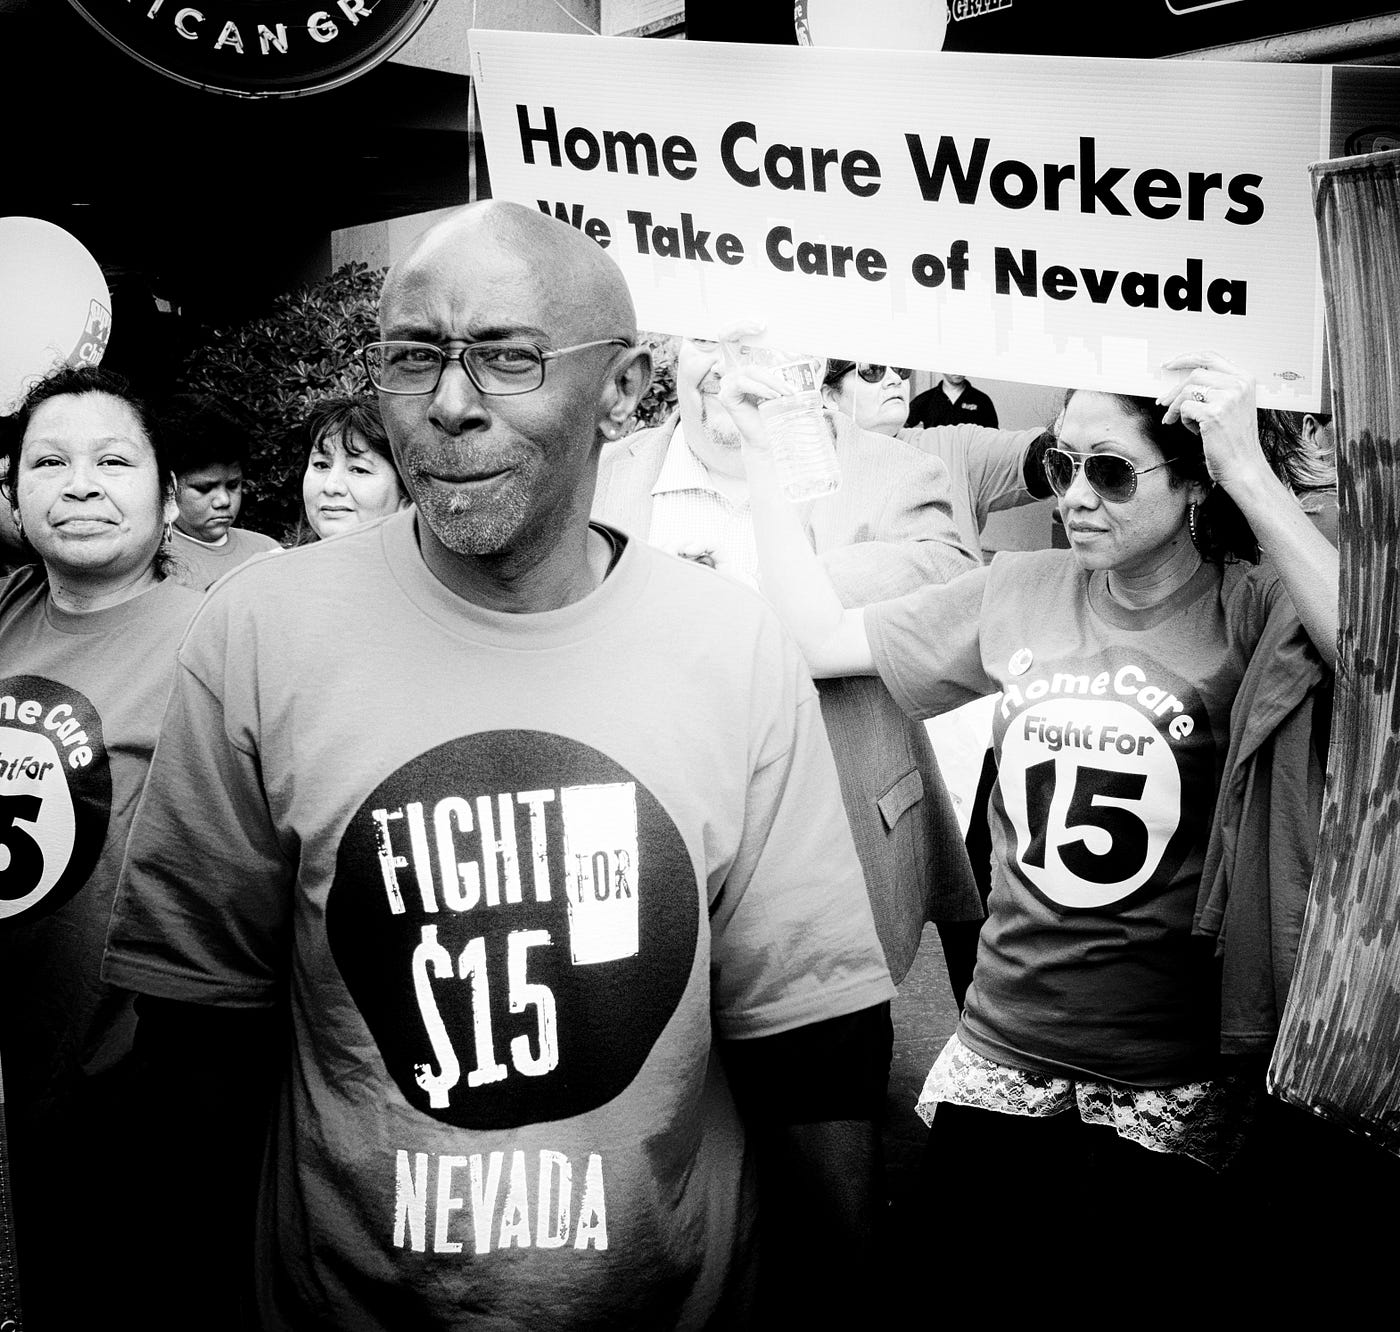 In Photos Las Vegas Fights For 15hour By Jason Karsh Vantage Medium 